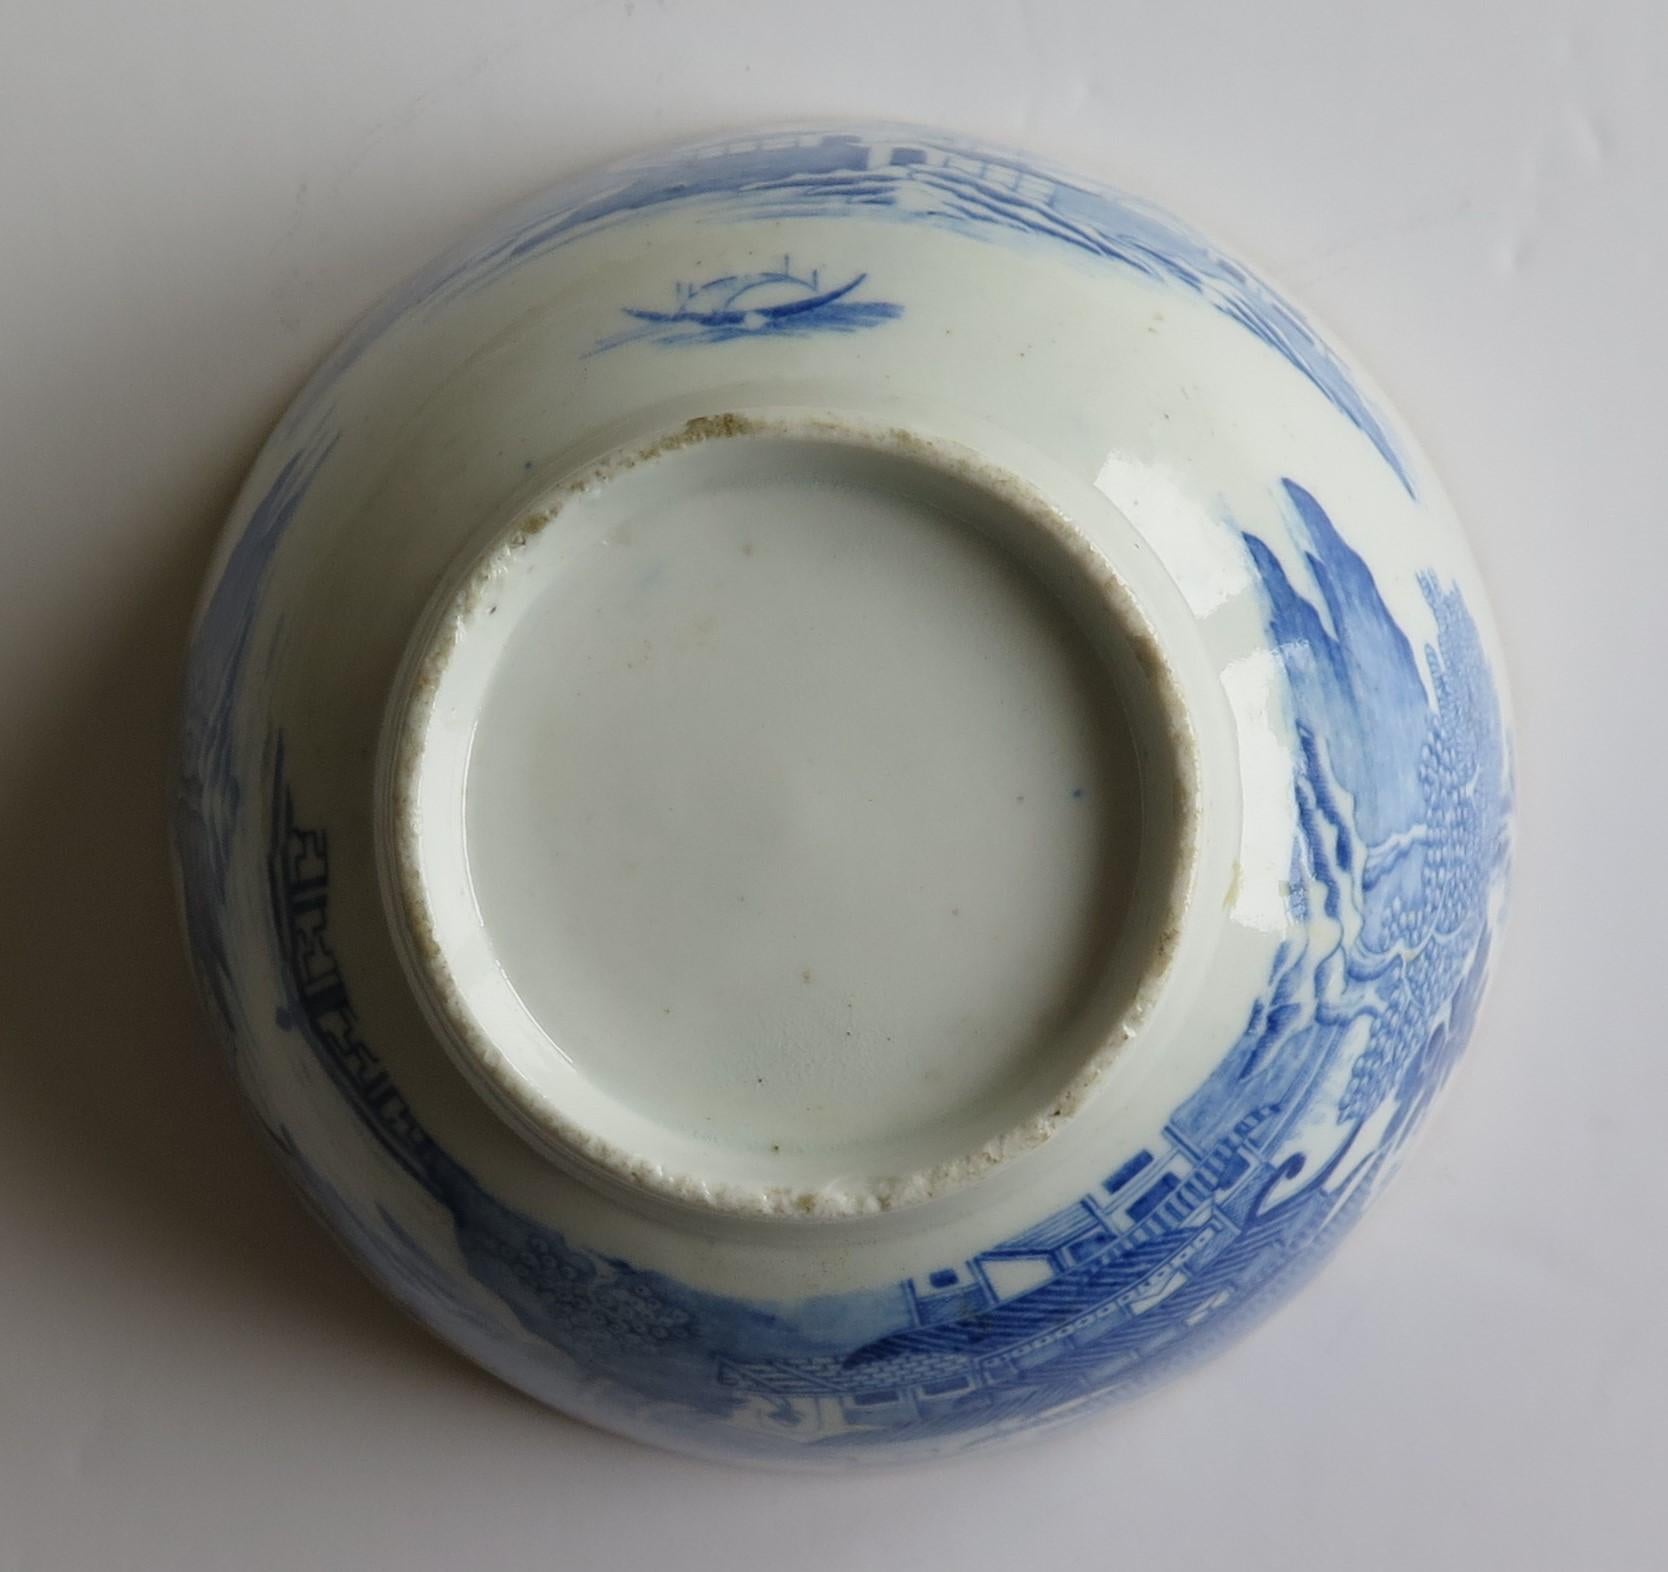 Miles Mason Porcelain Bowl Blue and White Broseley Pattern, English, circa 1805 13